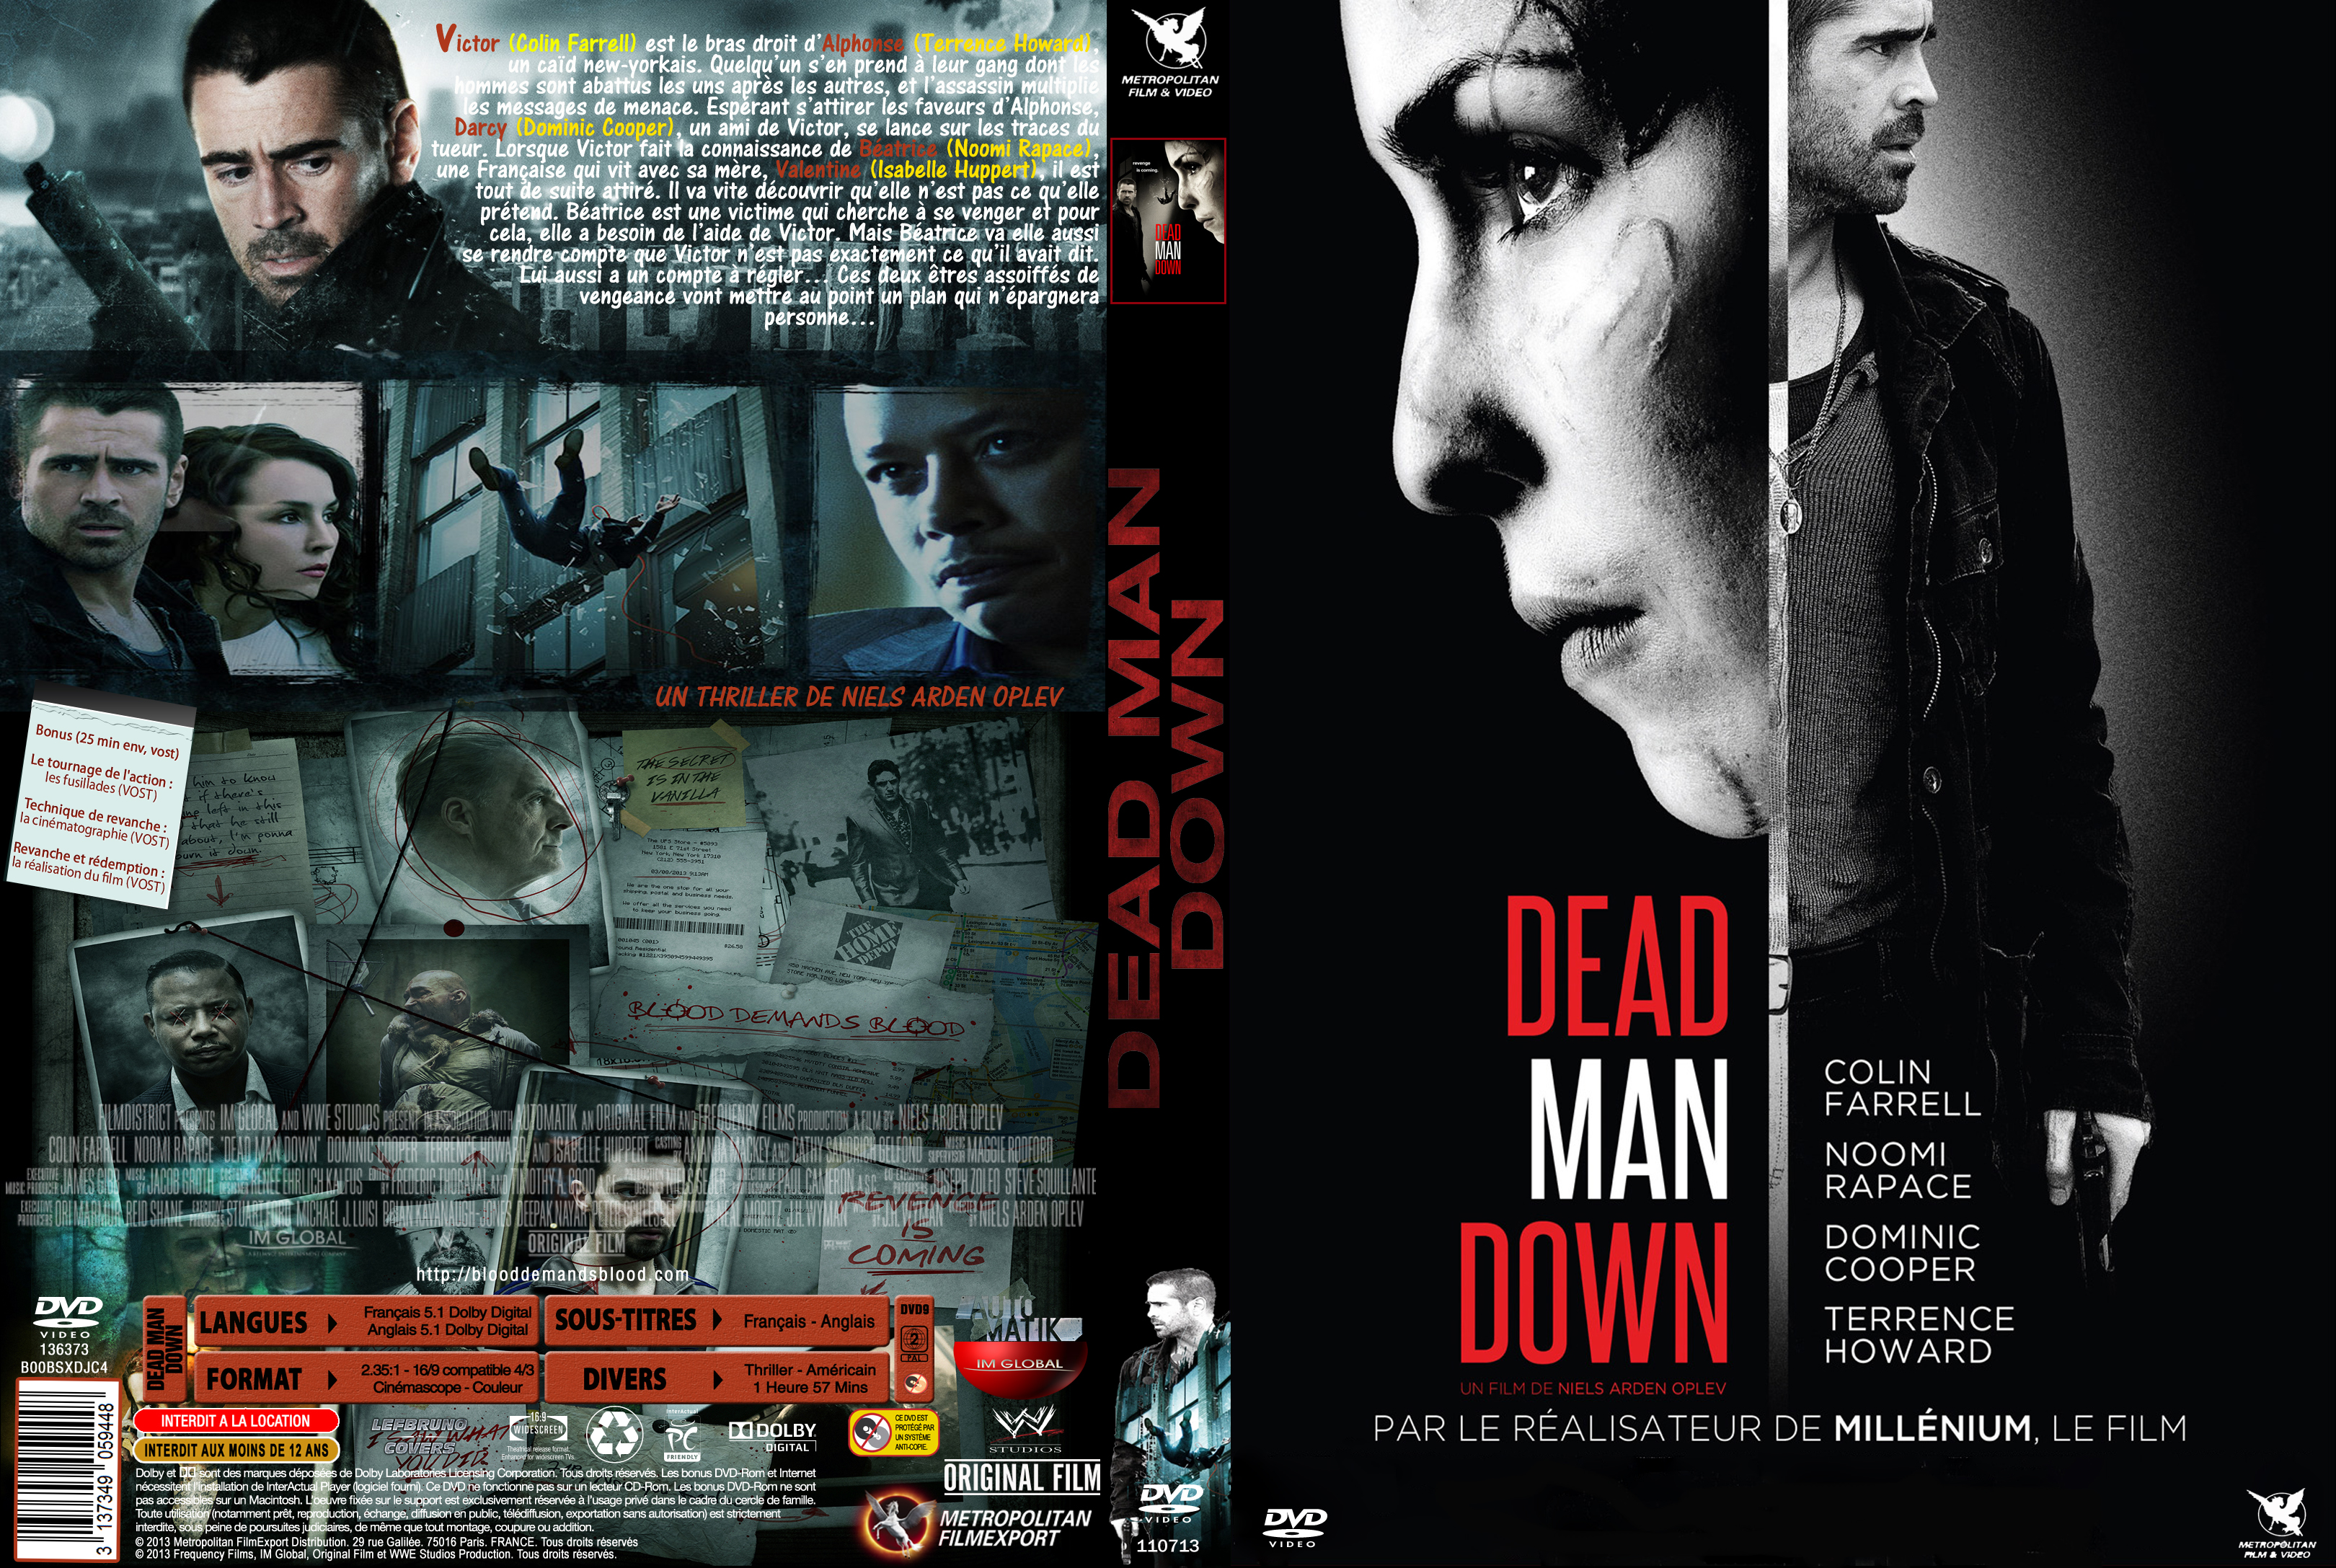 Jaquette DVD Dead Man Down custom v2